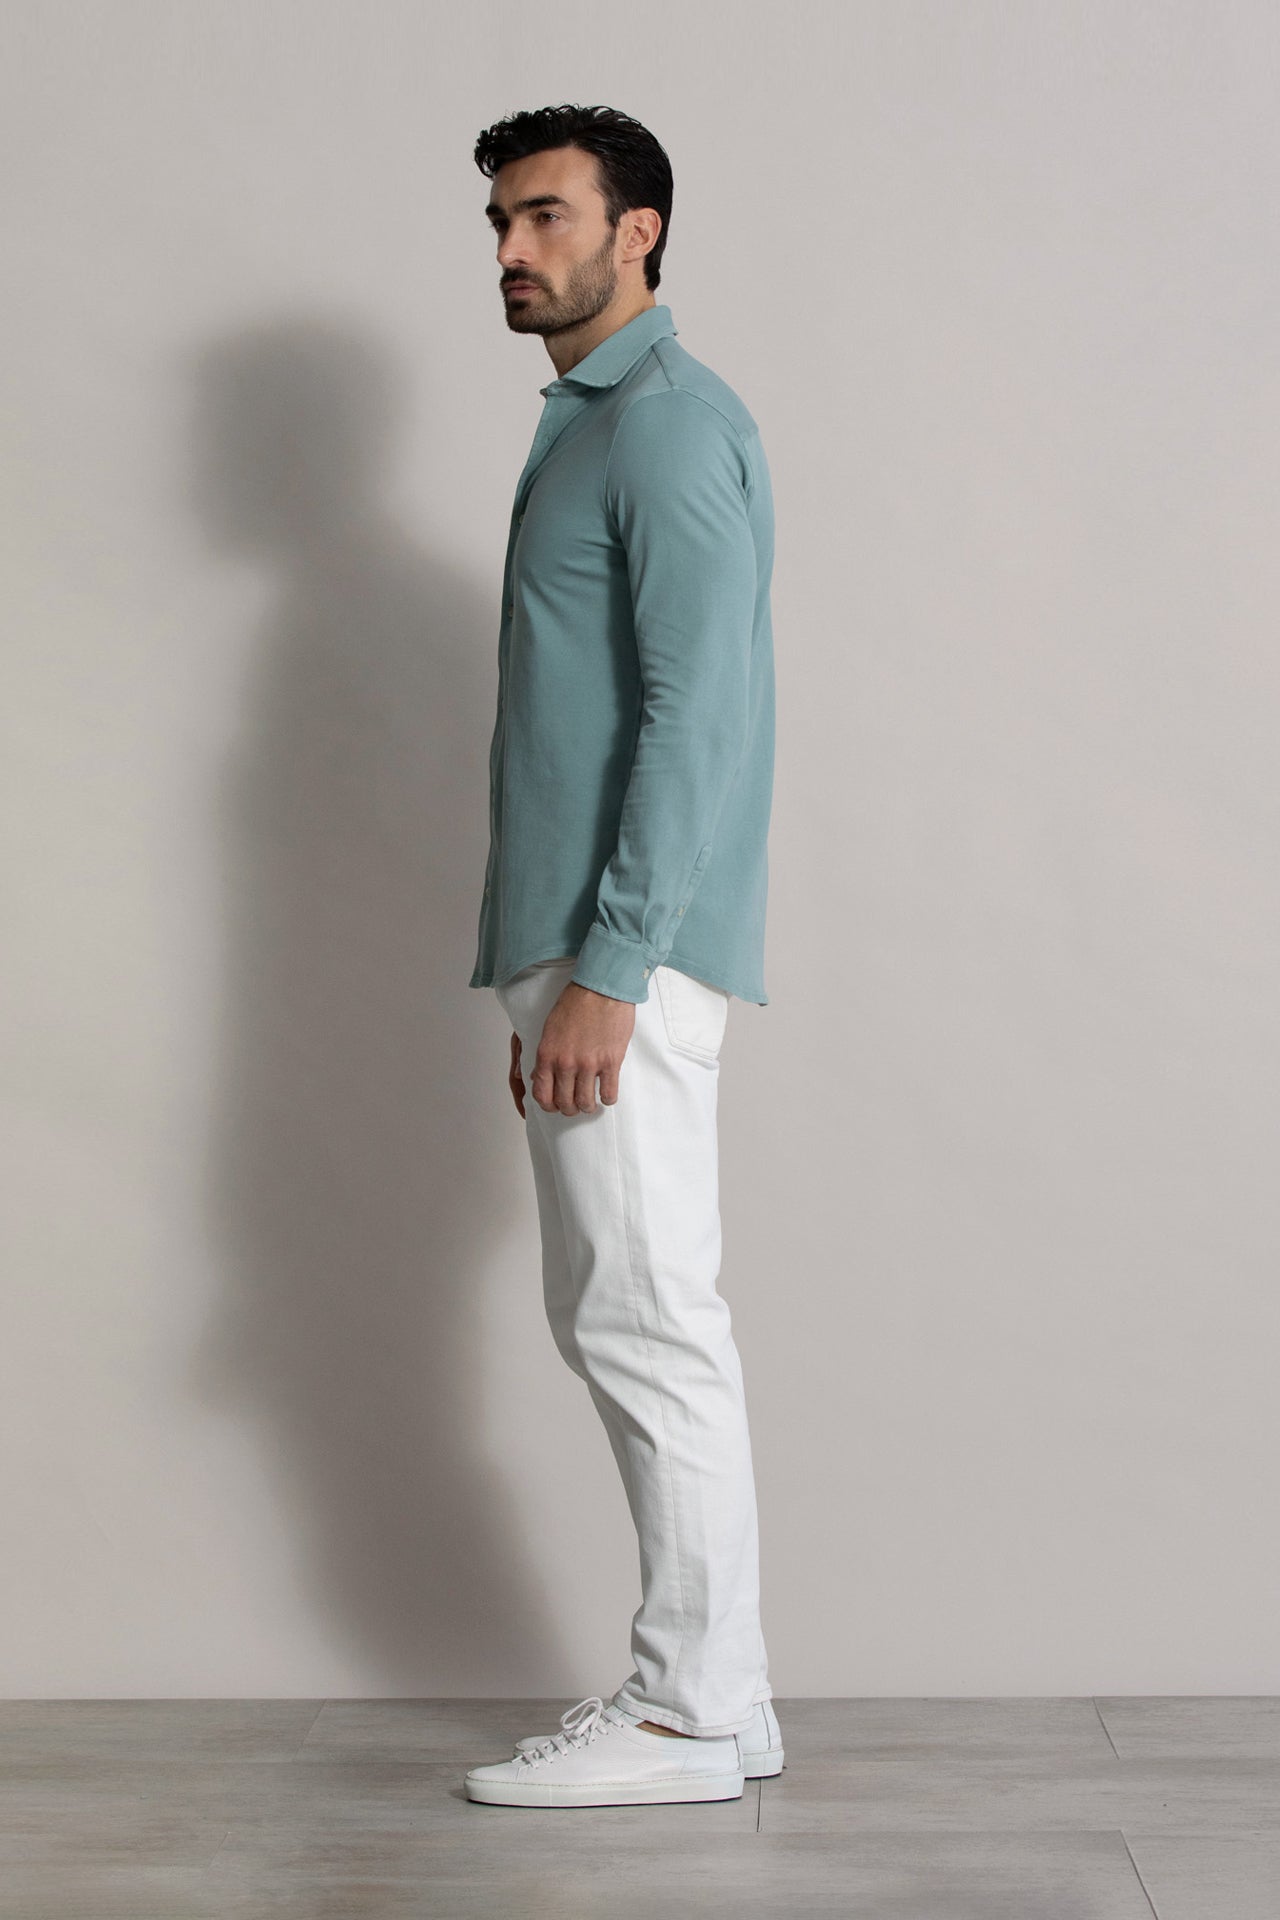 Men's designer shirt in organic cotton: sea green - side view